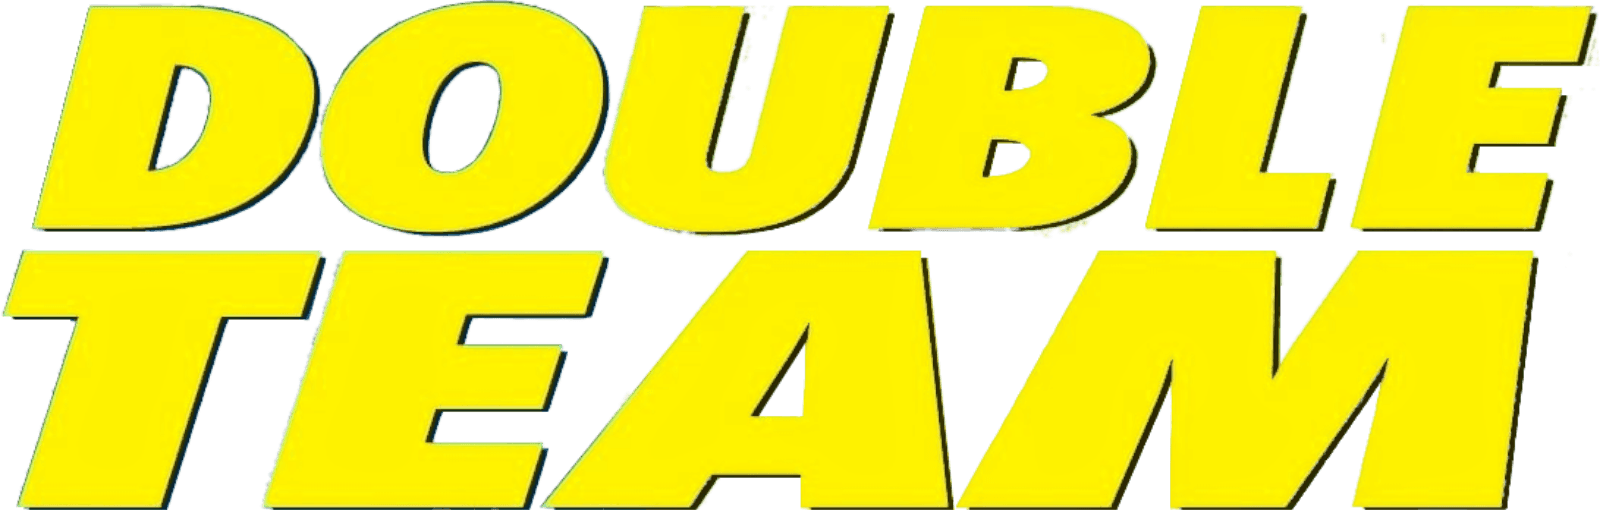 Double Team logo